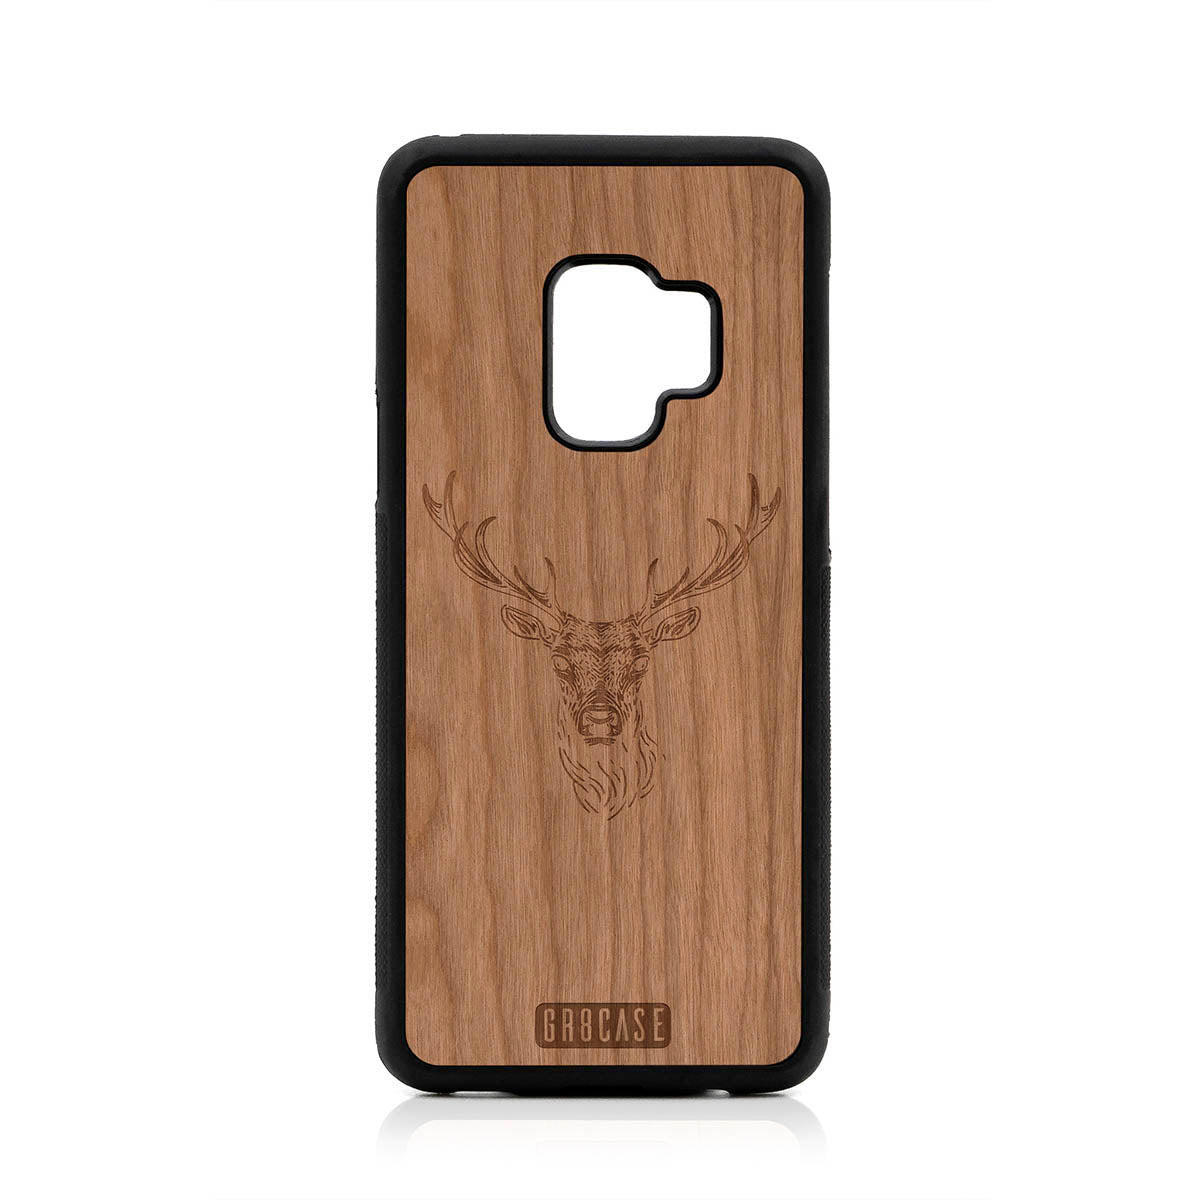 Elk Buck Design Wood Case For Samsung Galaxy S9 by GR8CASE